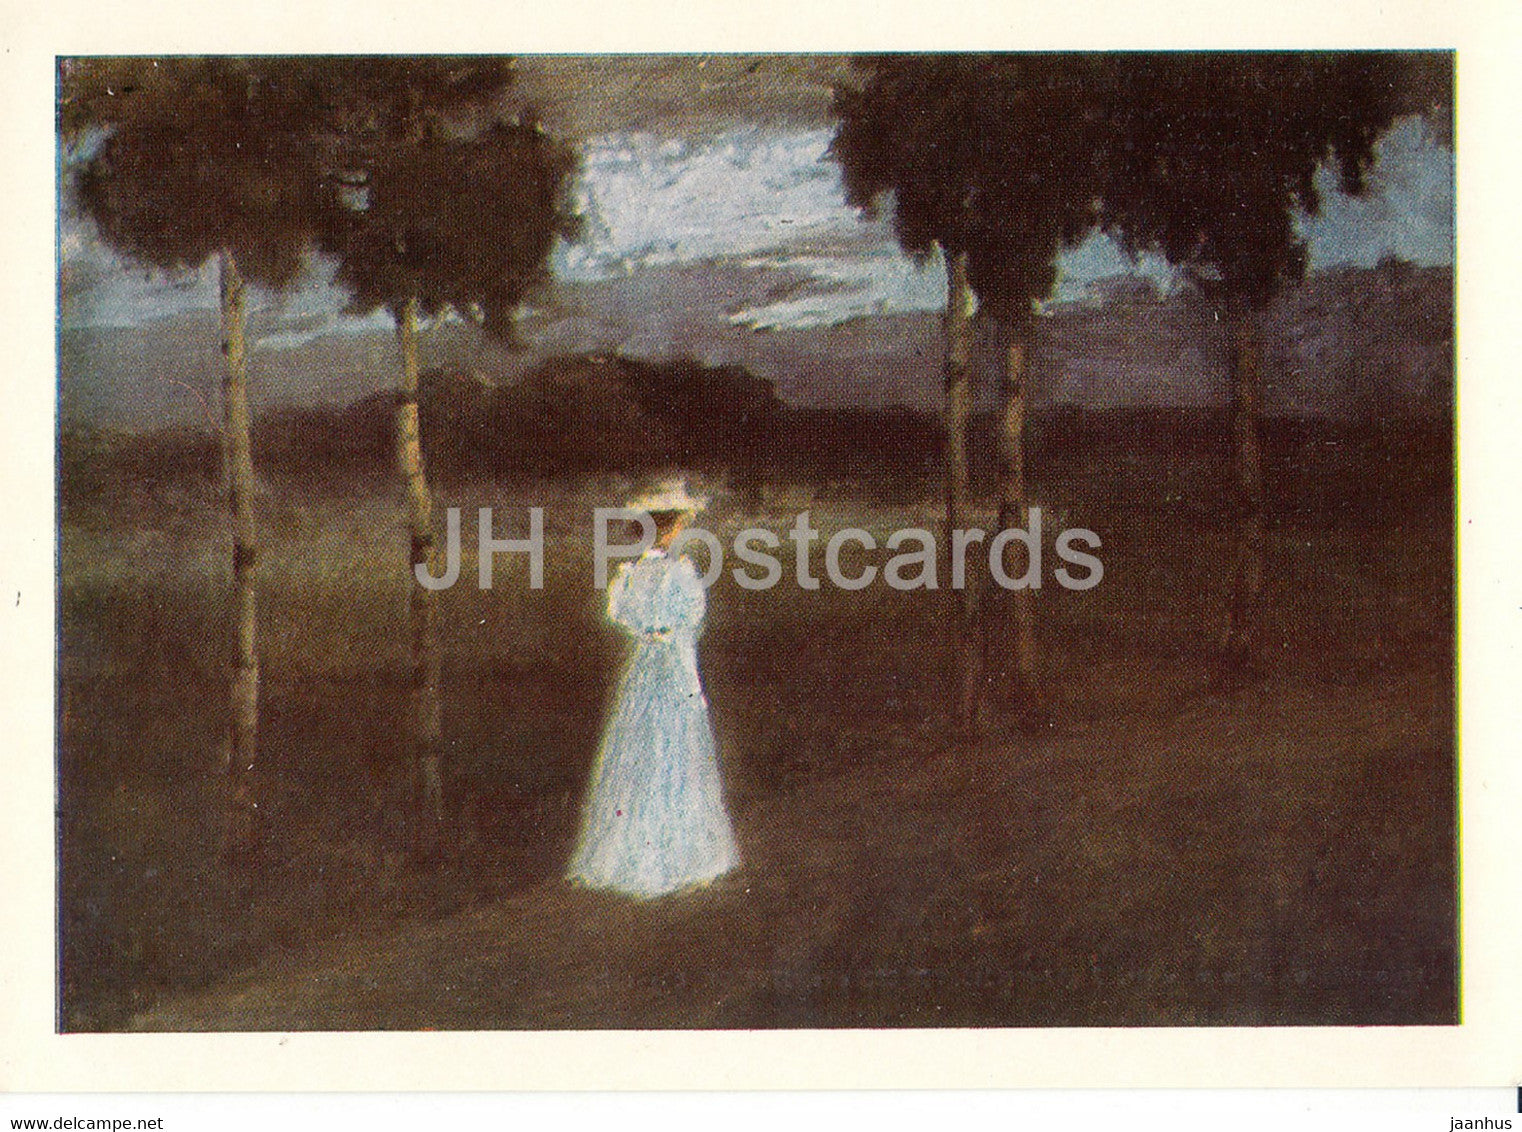 painting by Vilhelms Purvitis - Quietness of Country Side - Latvian art - Latvia USSR - unused - JH Postcards